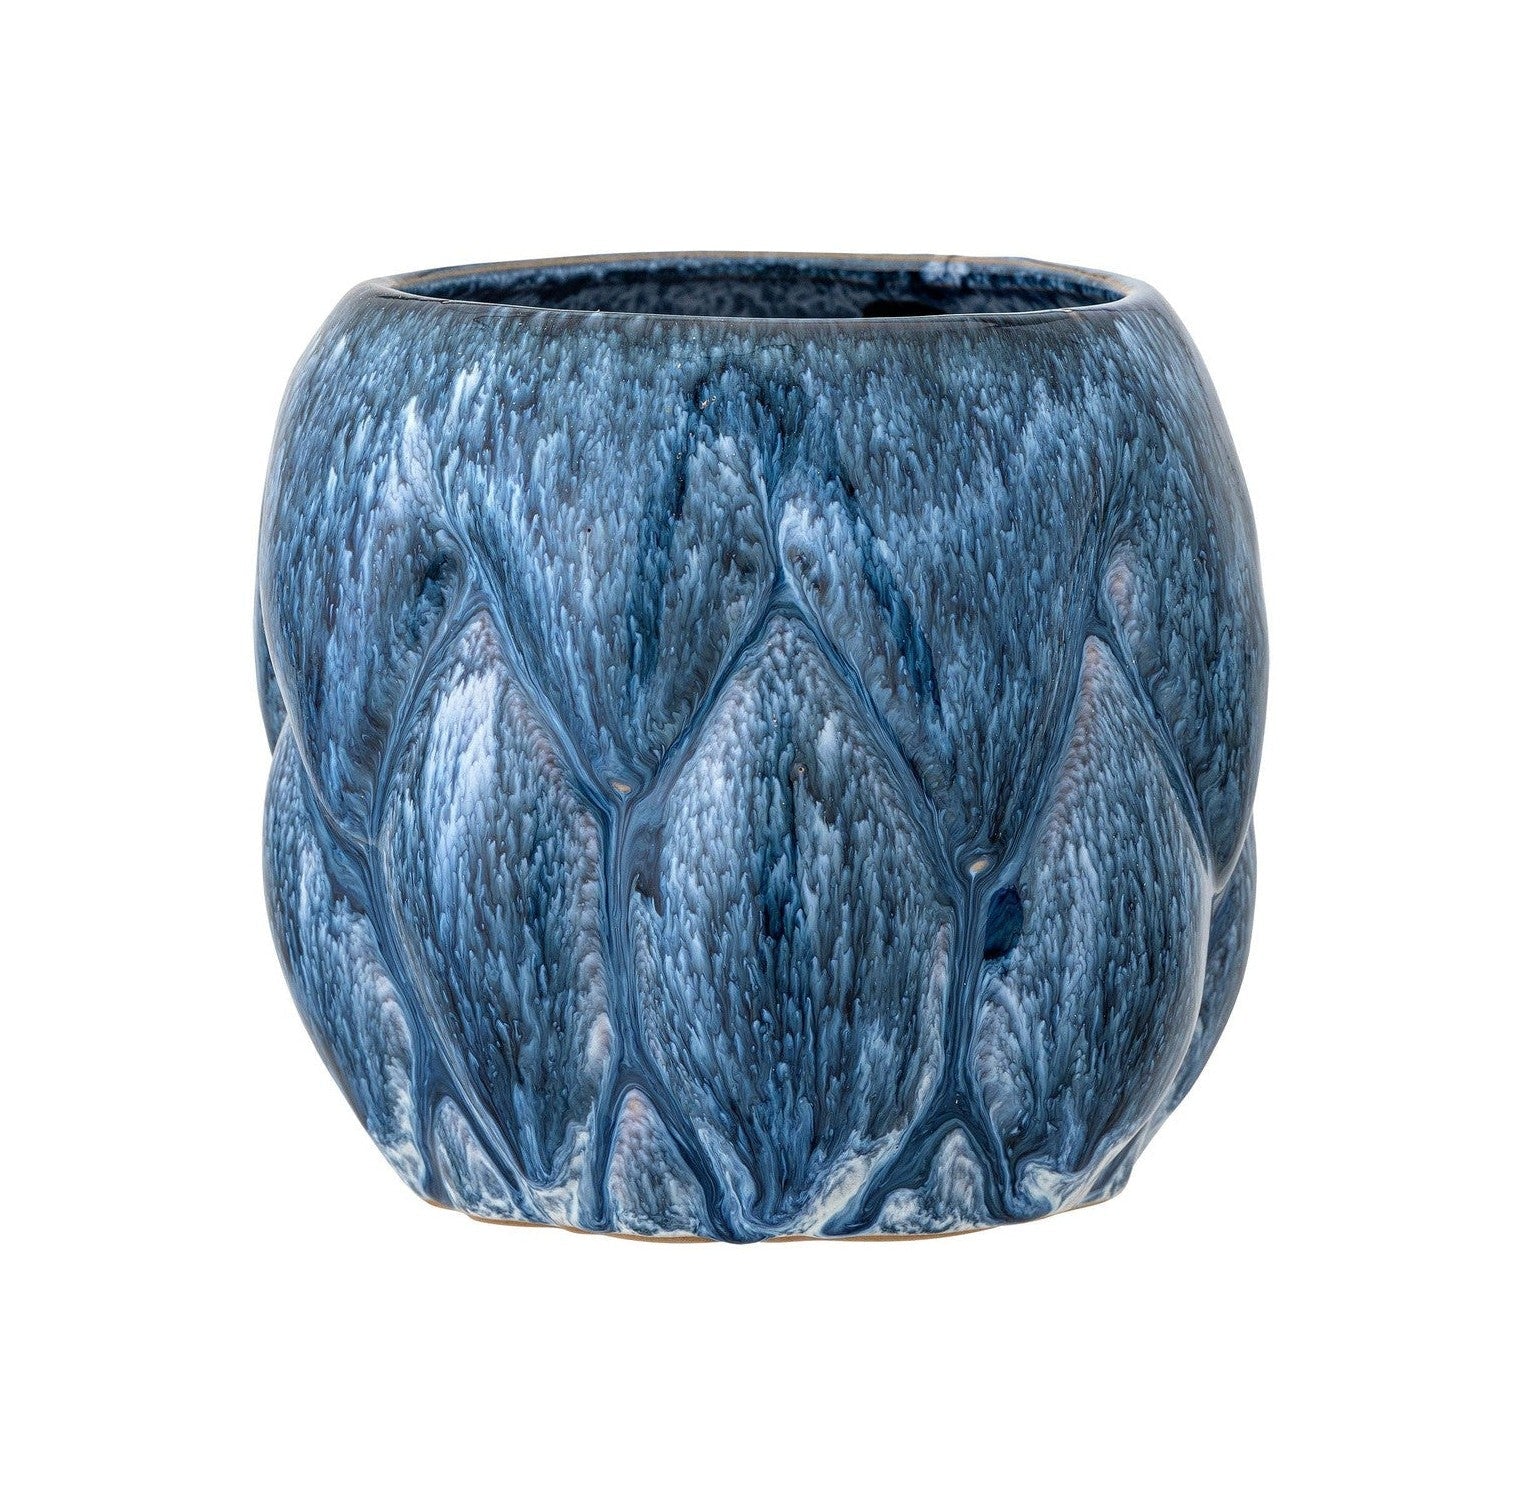 Creative Collection Posey Flowerpot, Blue, Stoneware